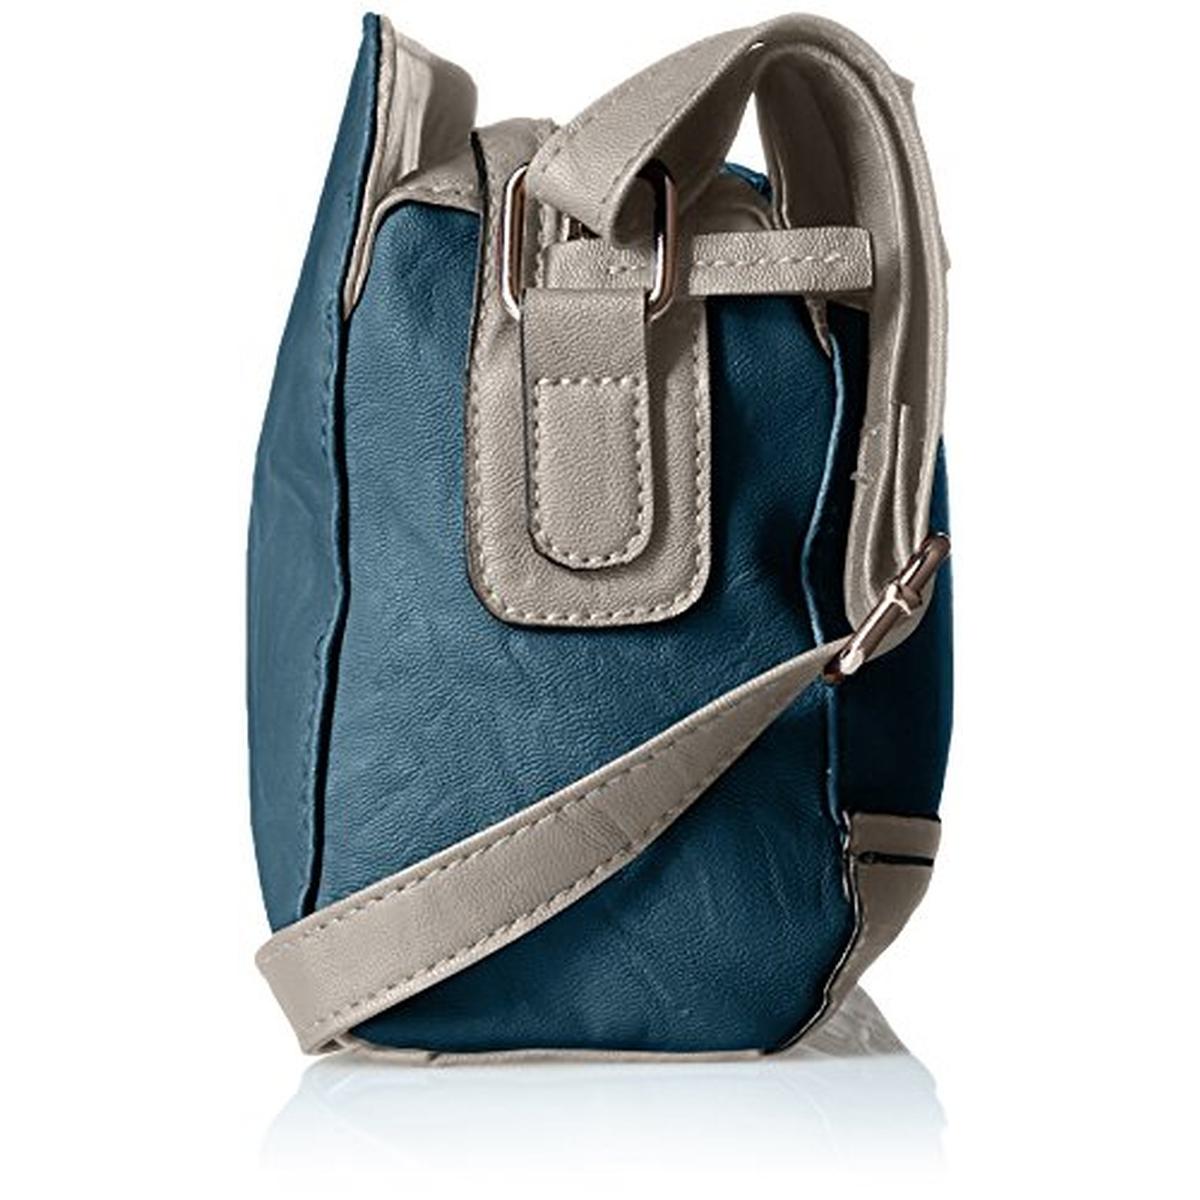 Rosetti 8161 Womens Hilary Faux Leather Textured Crossbody Handbag Purse BHFO | eBay